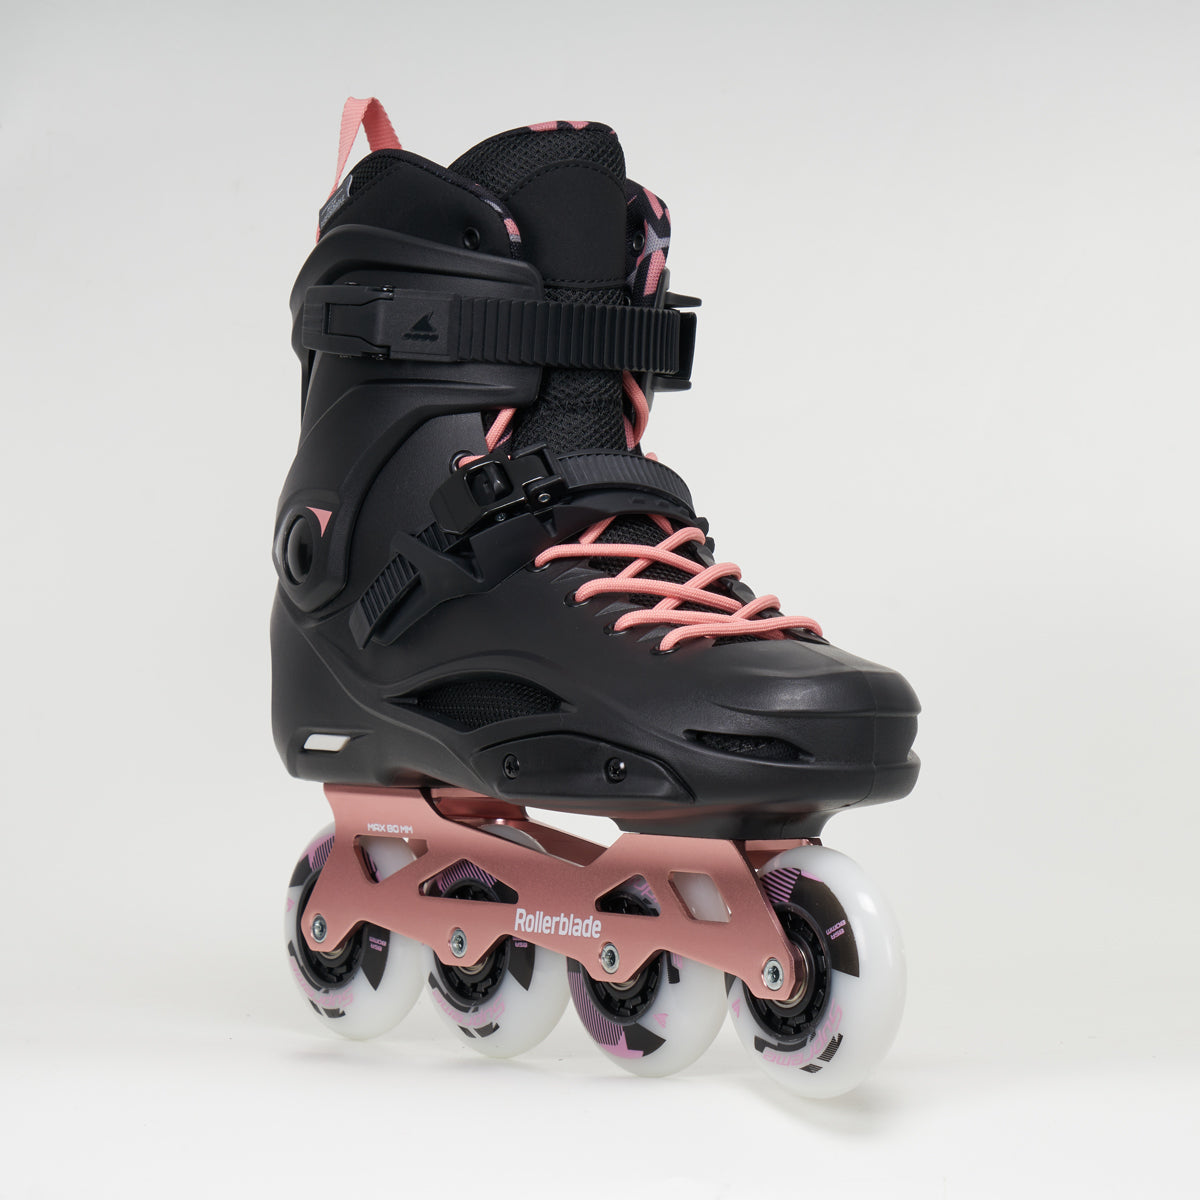 Rollerblade RB Pro X Woman's Inline Skates - Black / Pink